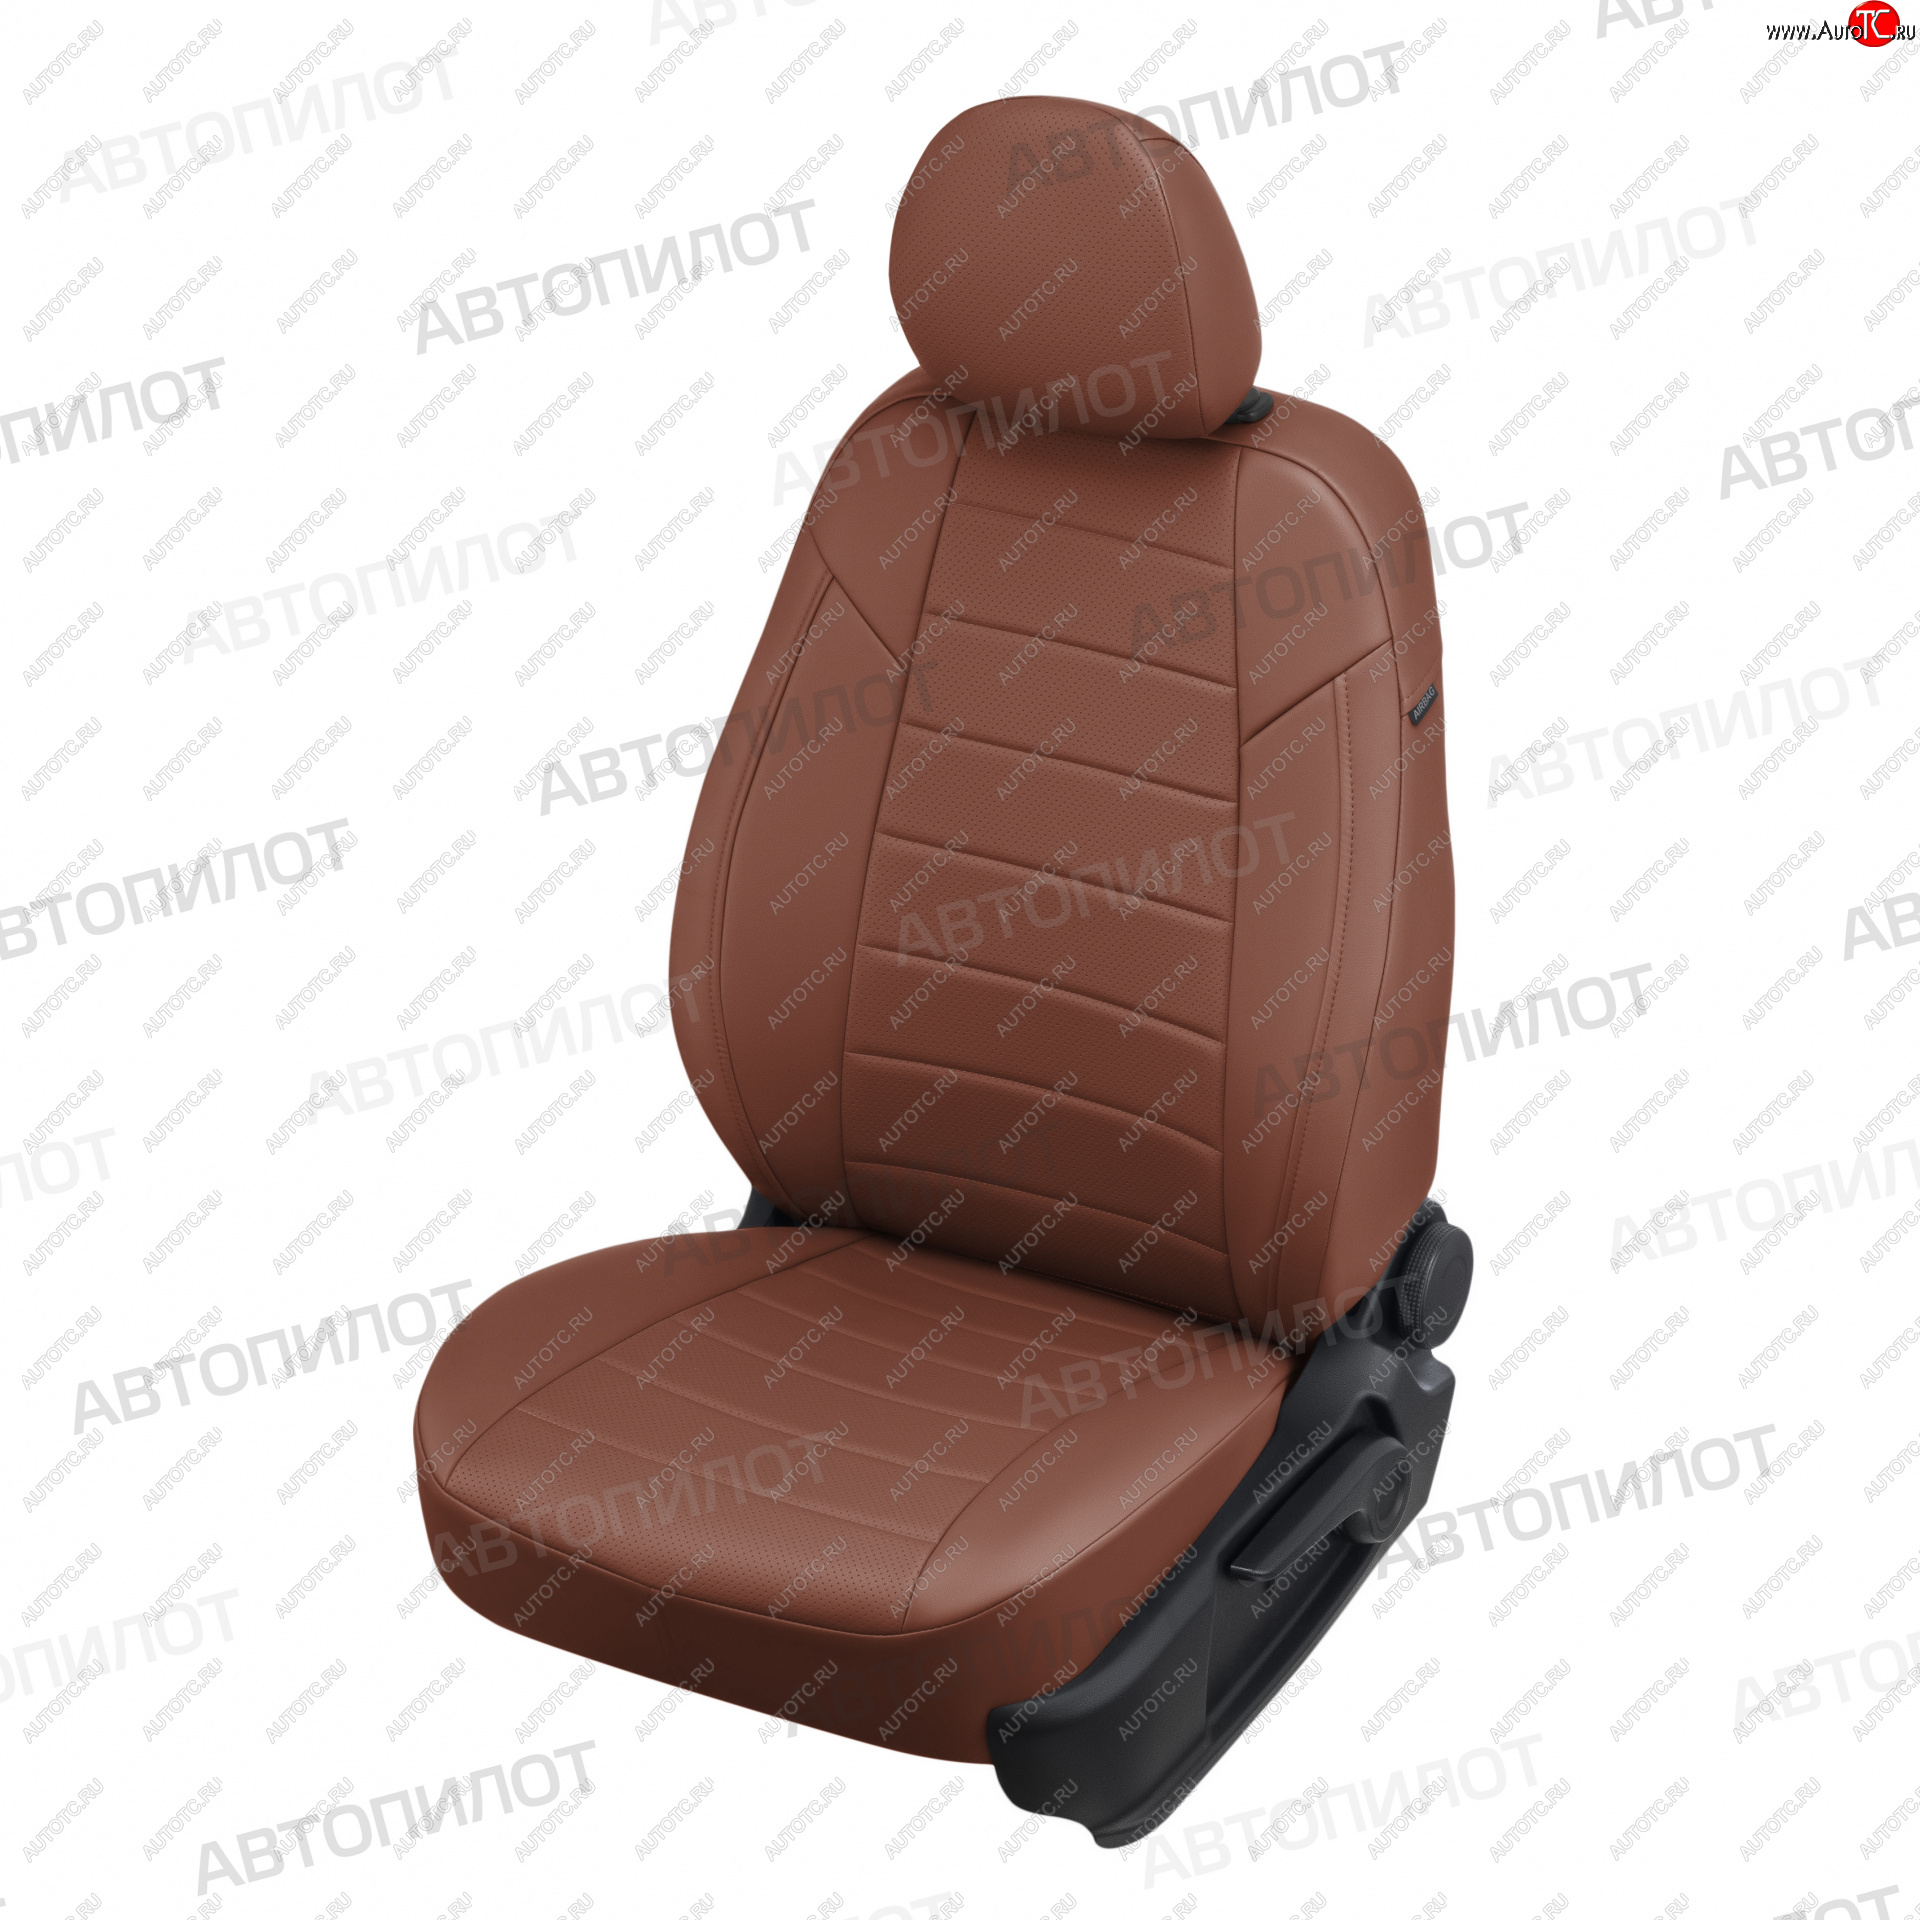 7 499 р. Чехлы сидений (экокожа) Автопилот  KIA Ceed  1 ED (2006-2012) (коричневый)